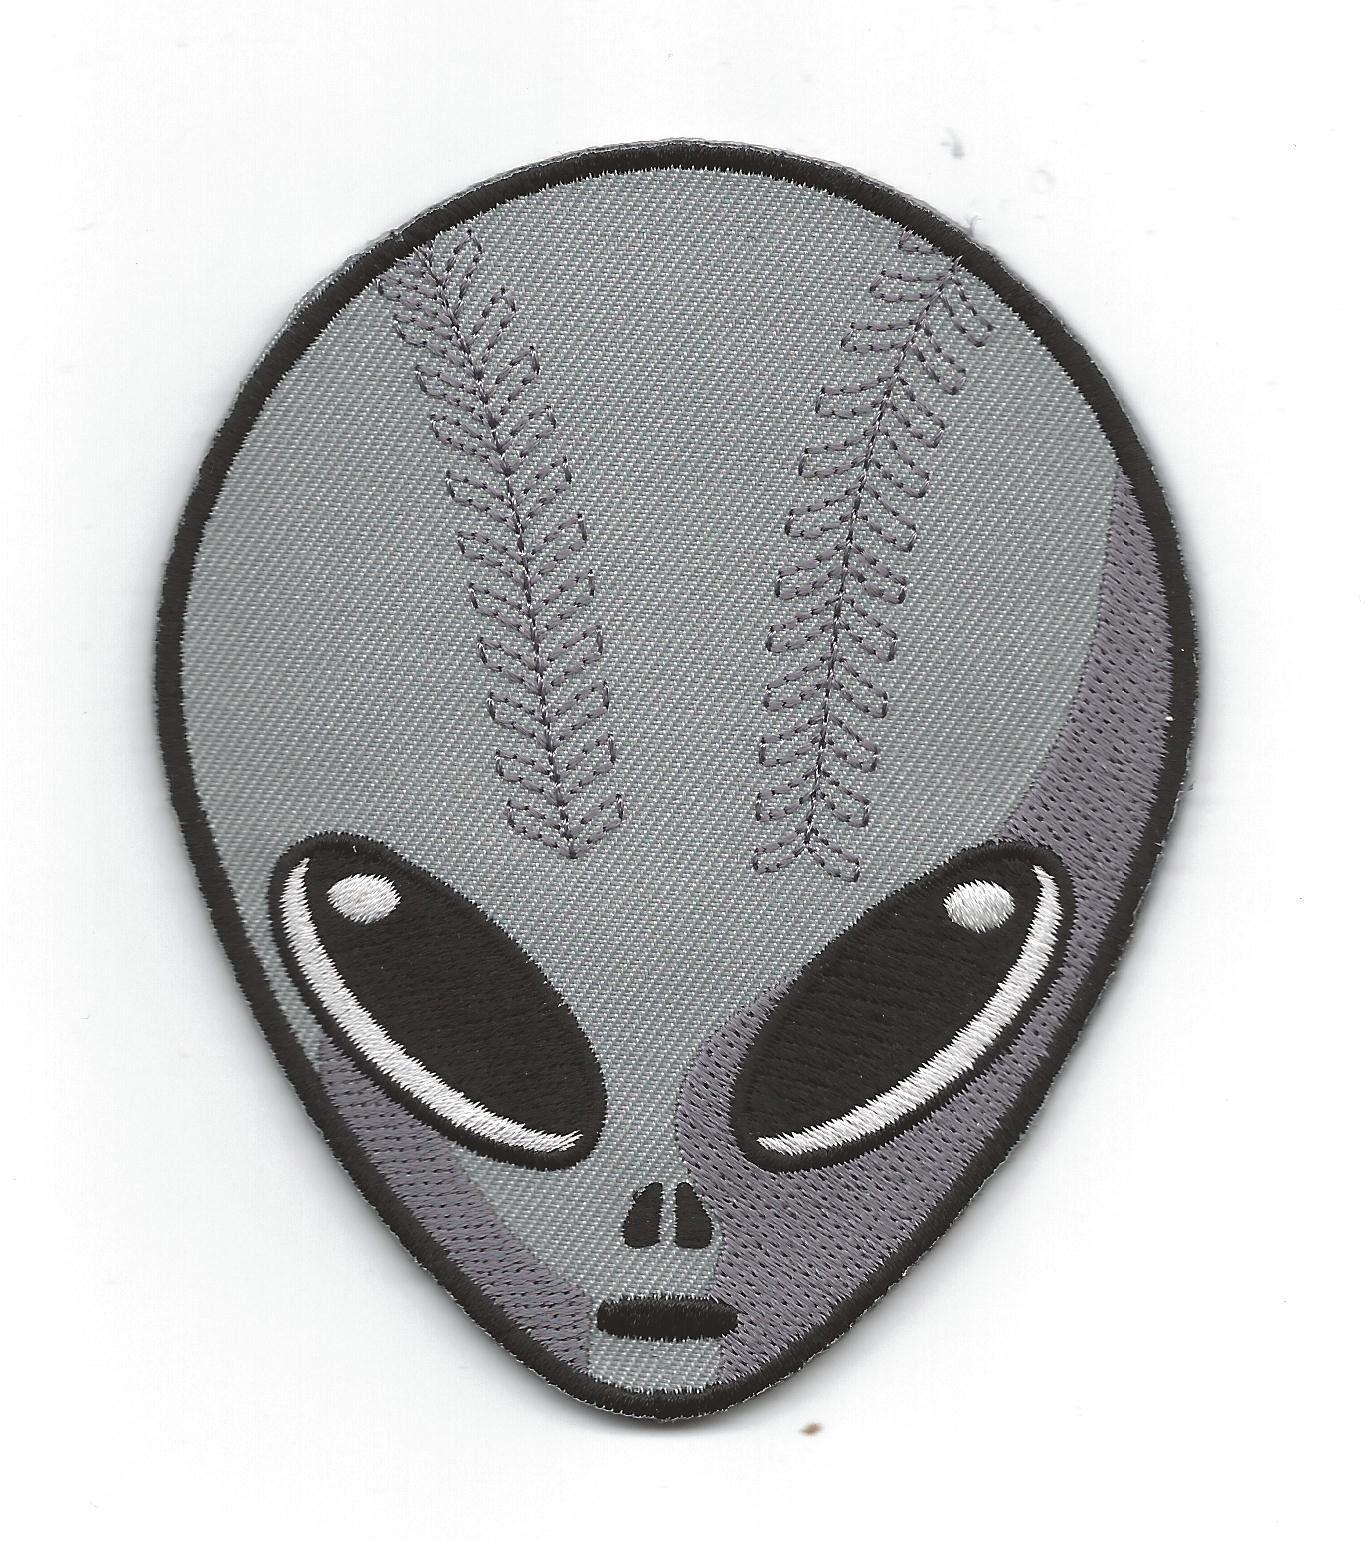 Las Vegas 51s Logo - Las Vegas 51s Alien Head Patch